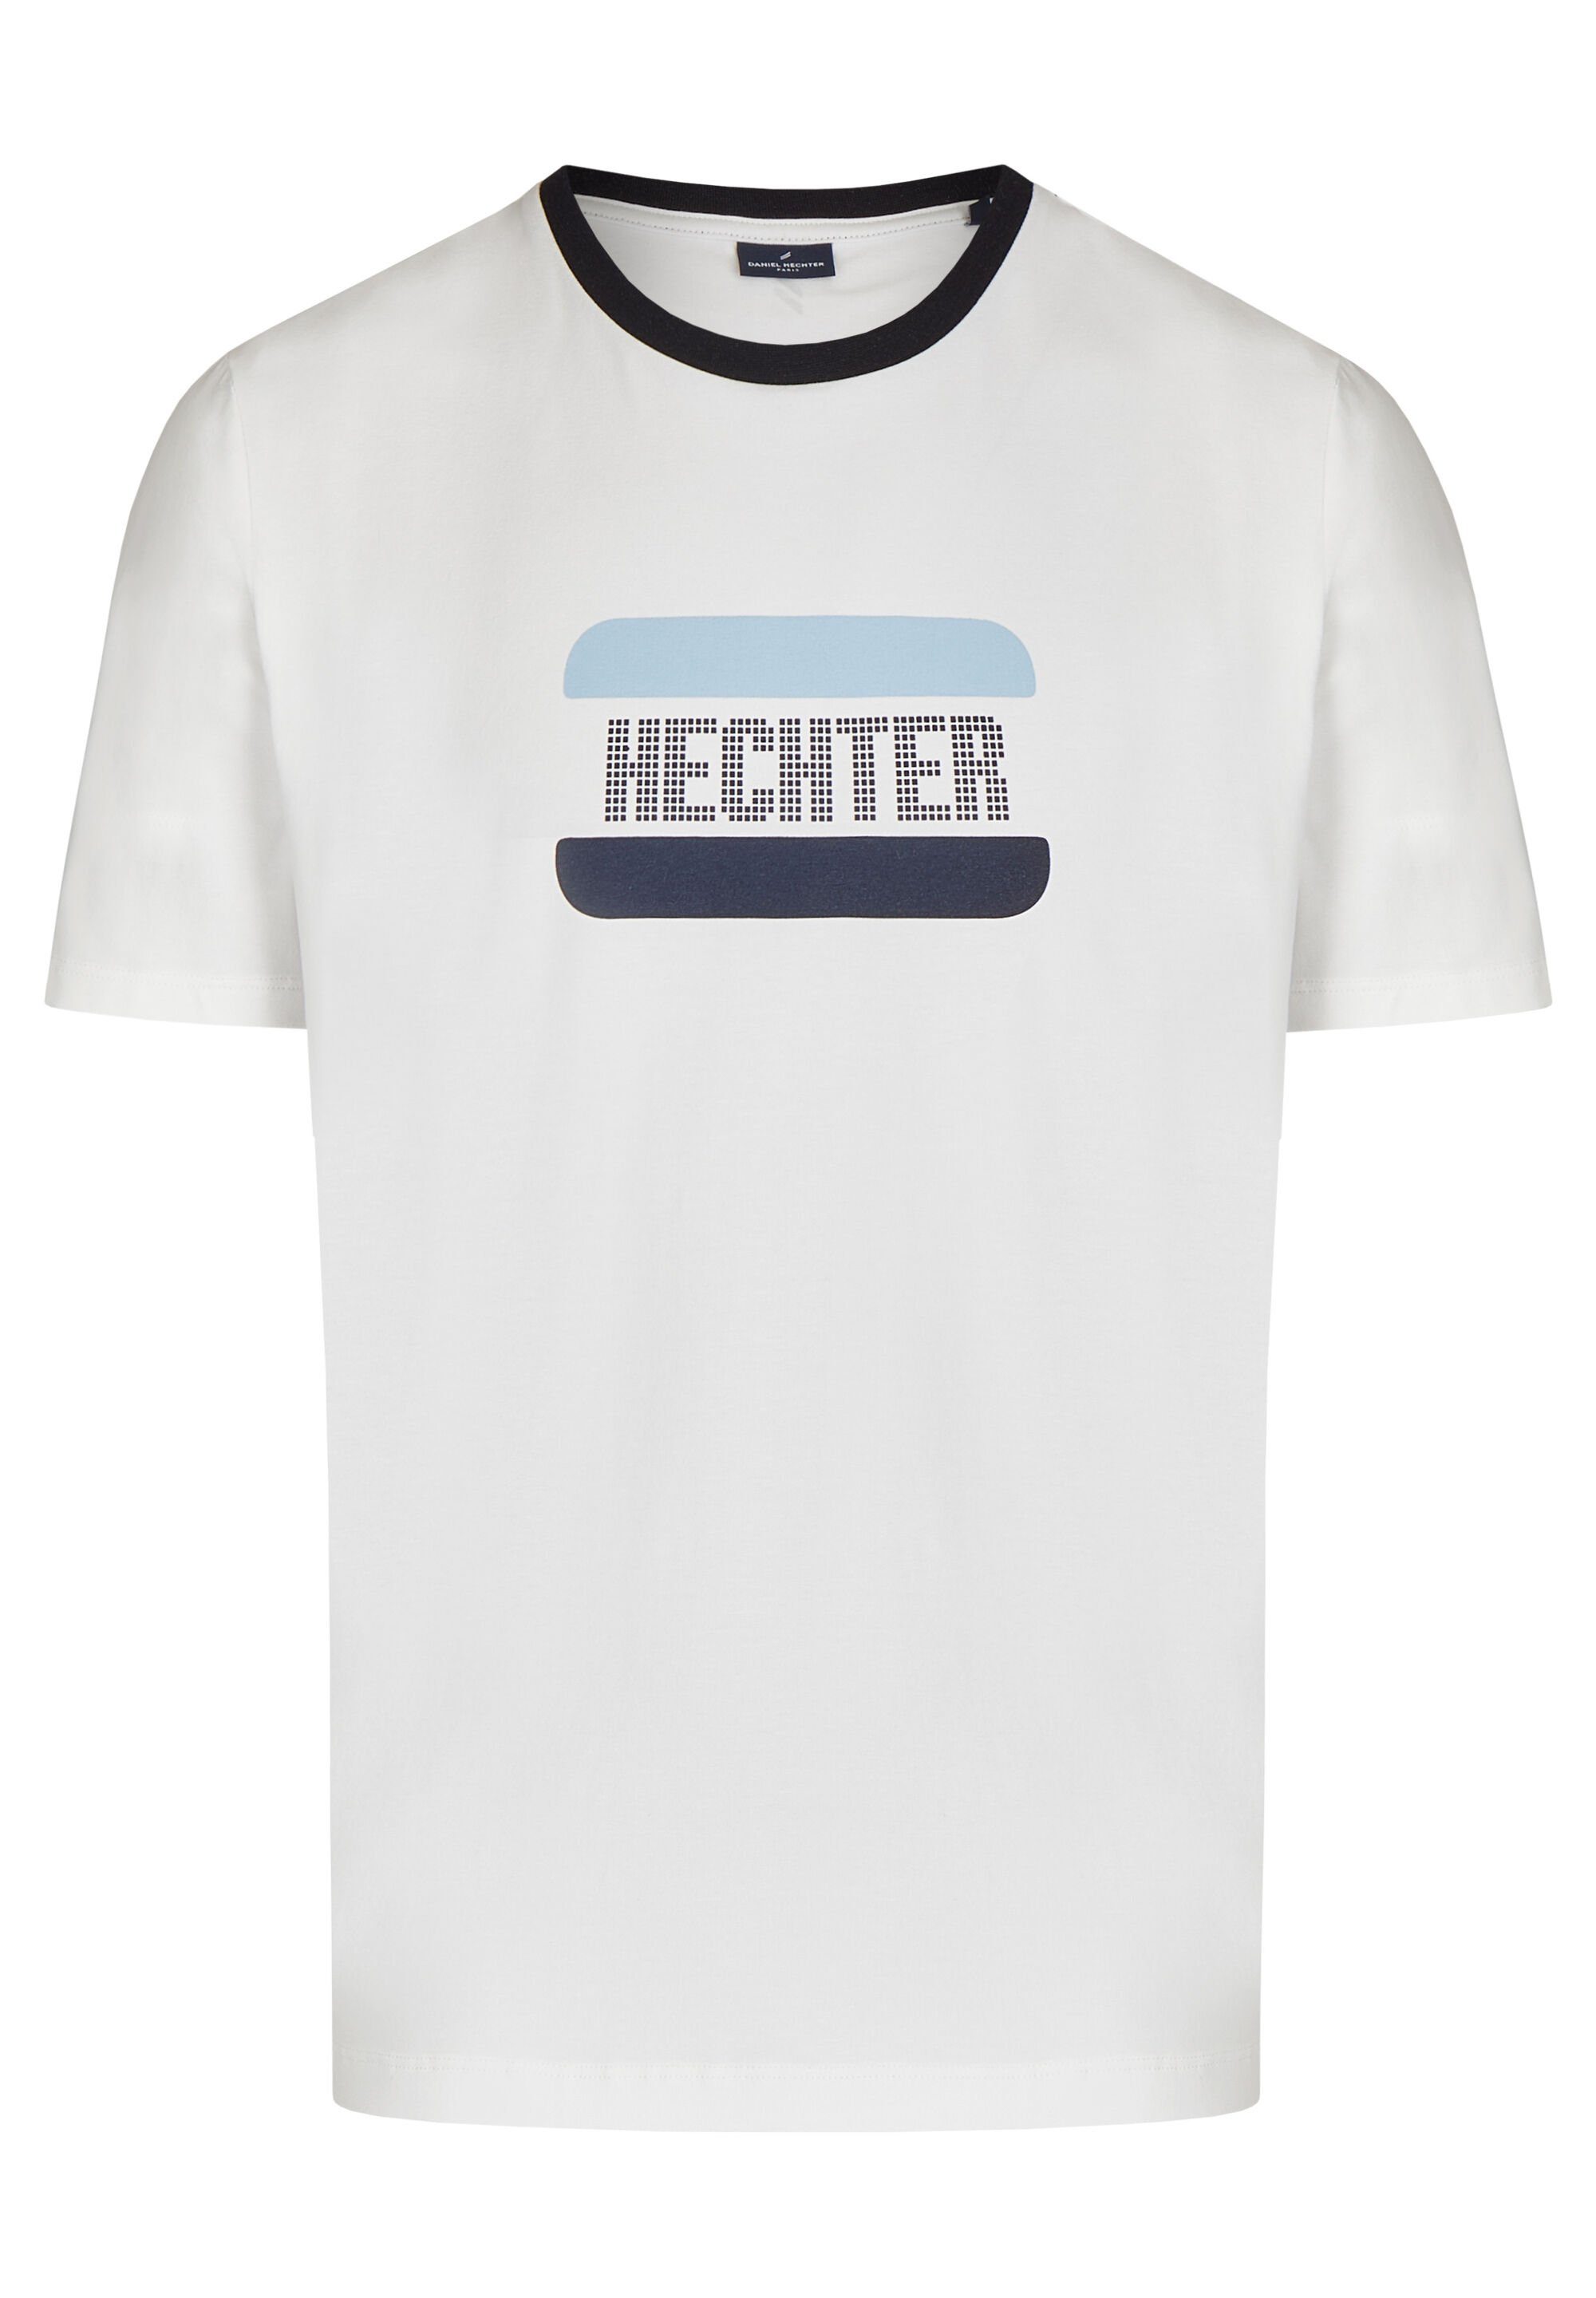 HECHTER PARIS T-Shirt mit Iconic Print white